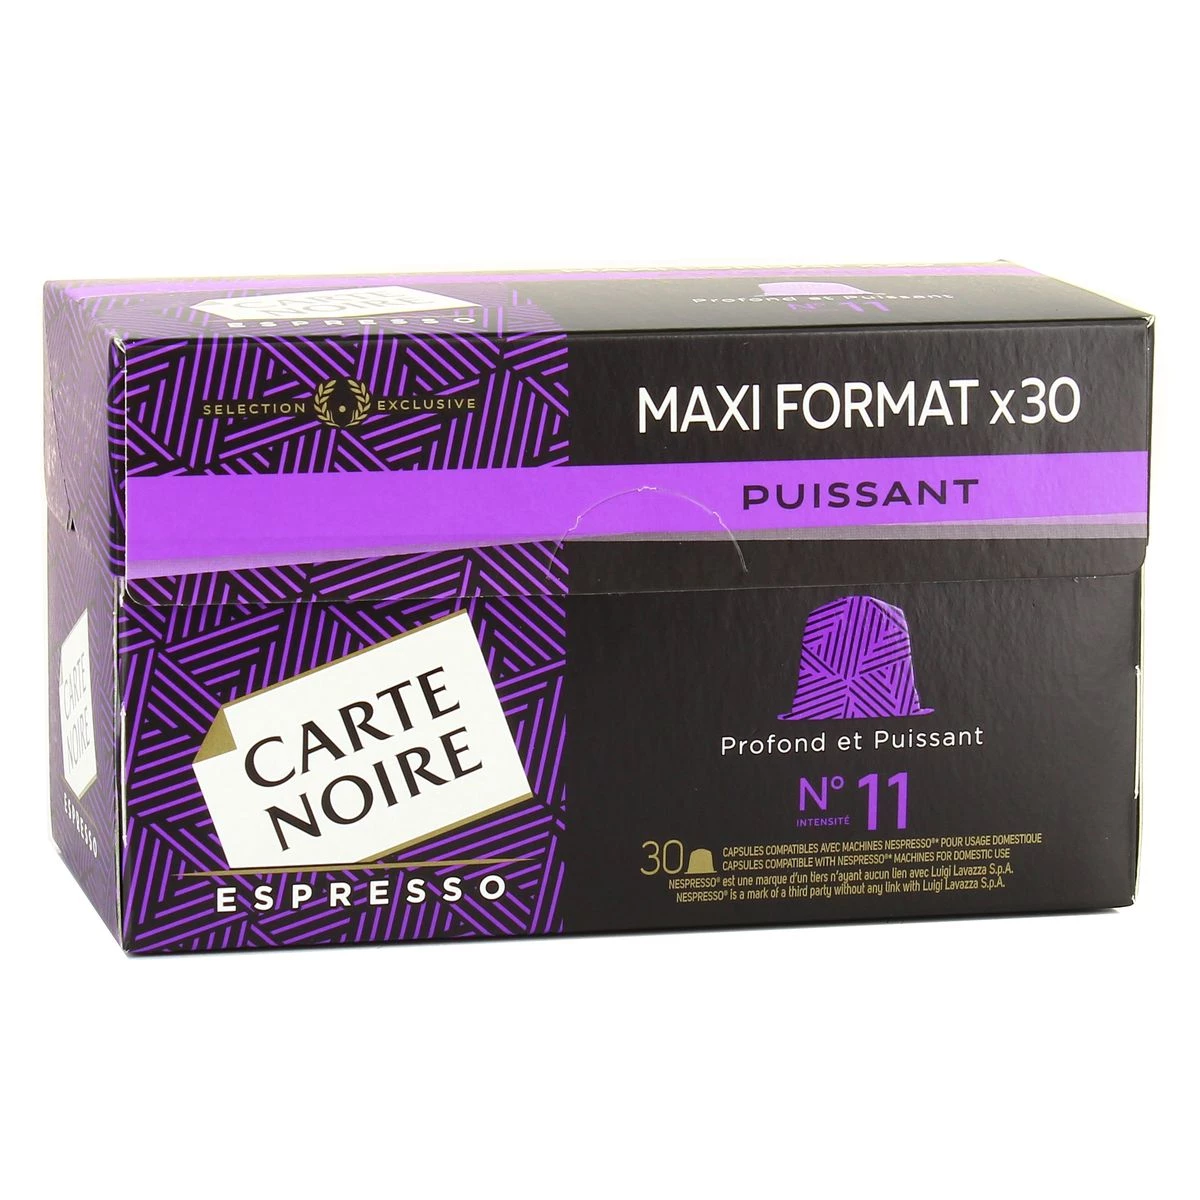 Powerful espresso coffee n°11 x30 capsules 159g - CARTE NOIRE